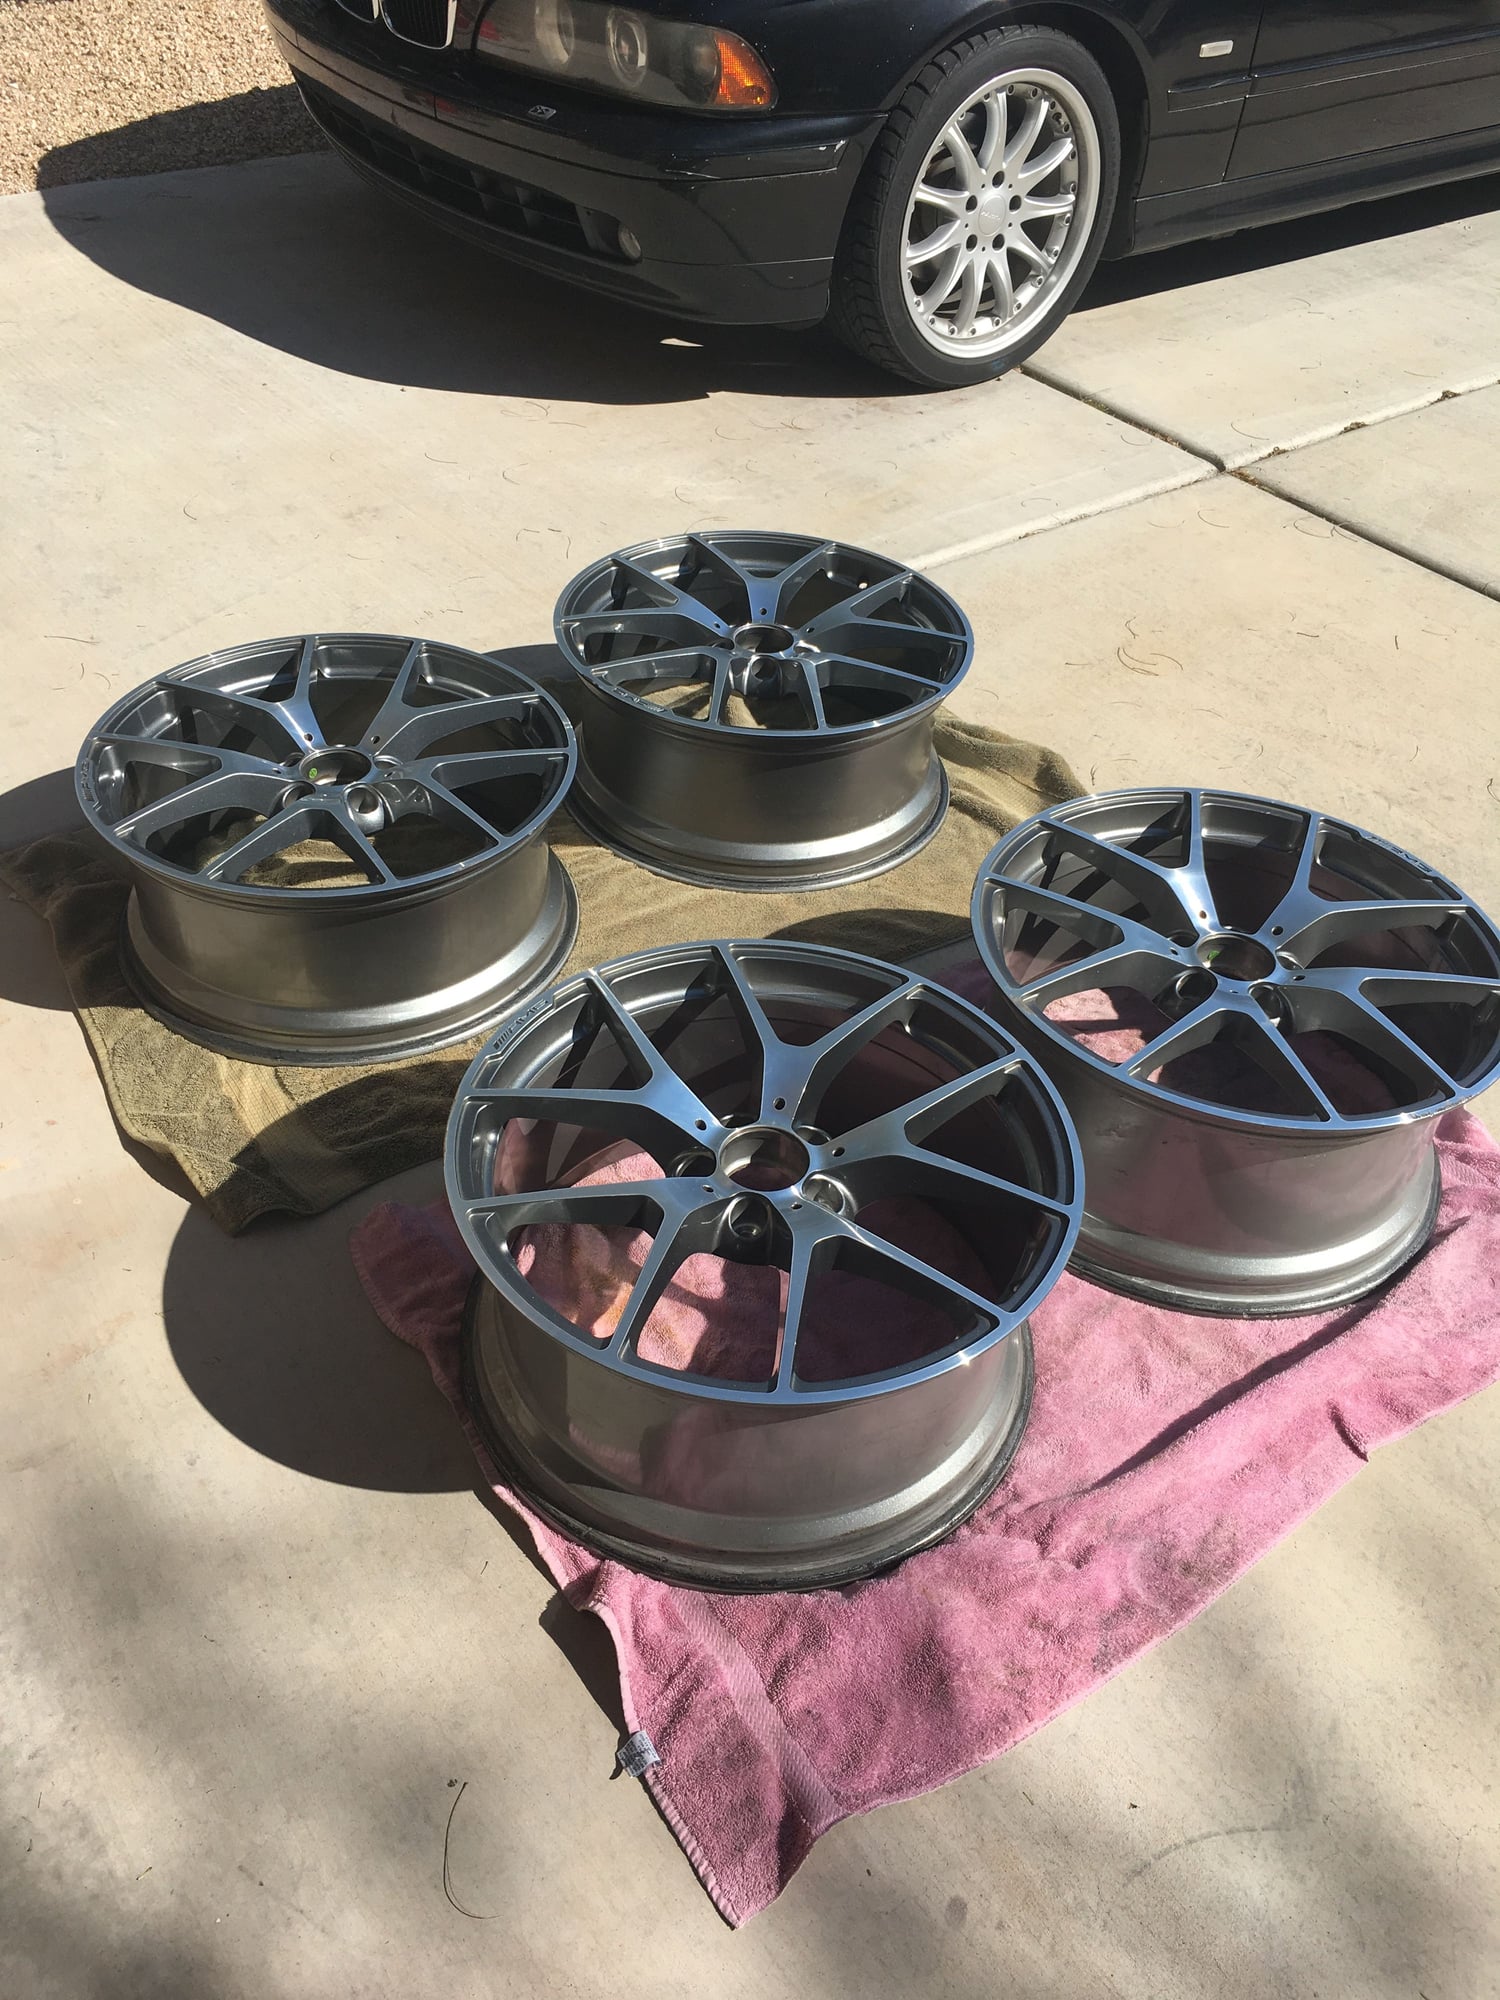 Wheels and Tires/Axles - OEM C63 507 Forged Wheels - Used - Phoenix, AZ 85085, United States